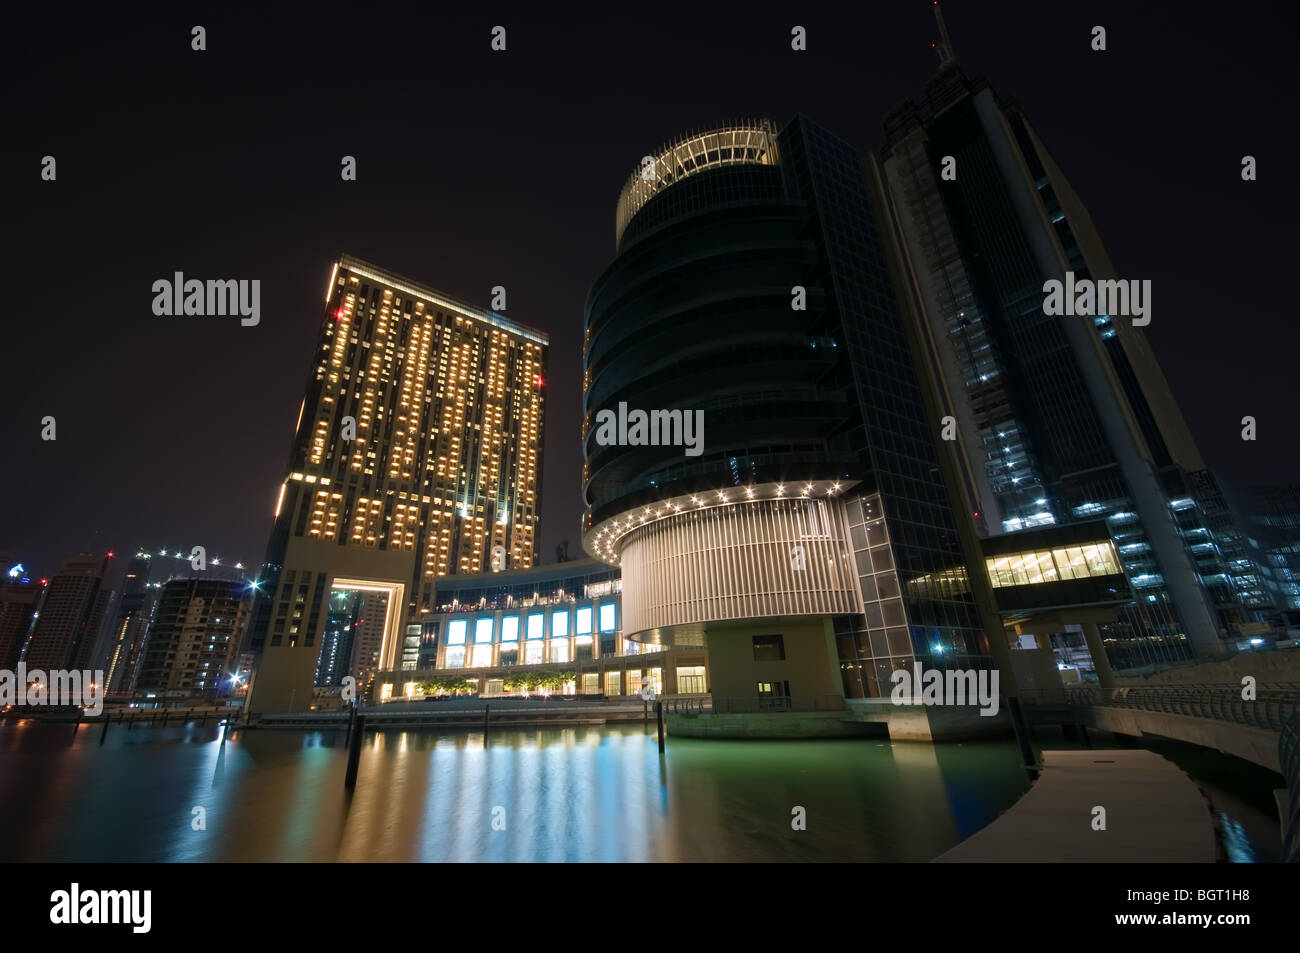 The Address Hotel and Gourmet Tower, Dubai Marina Stock Photo